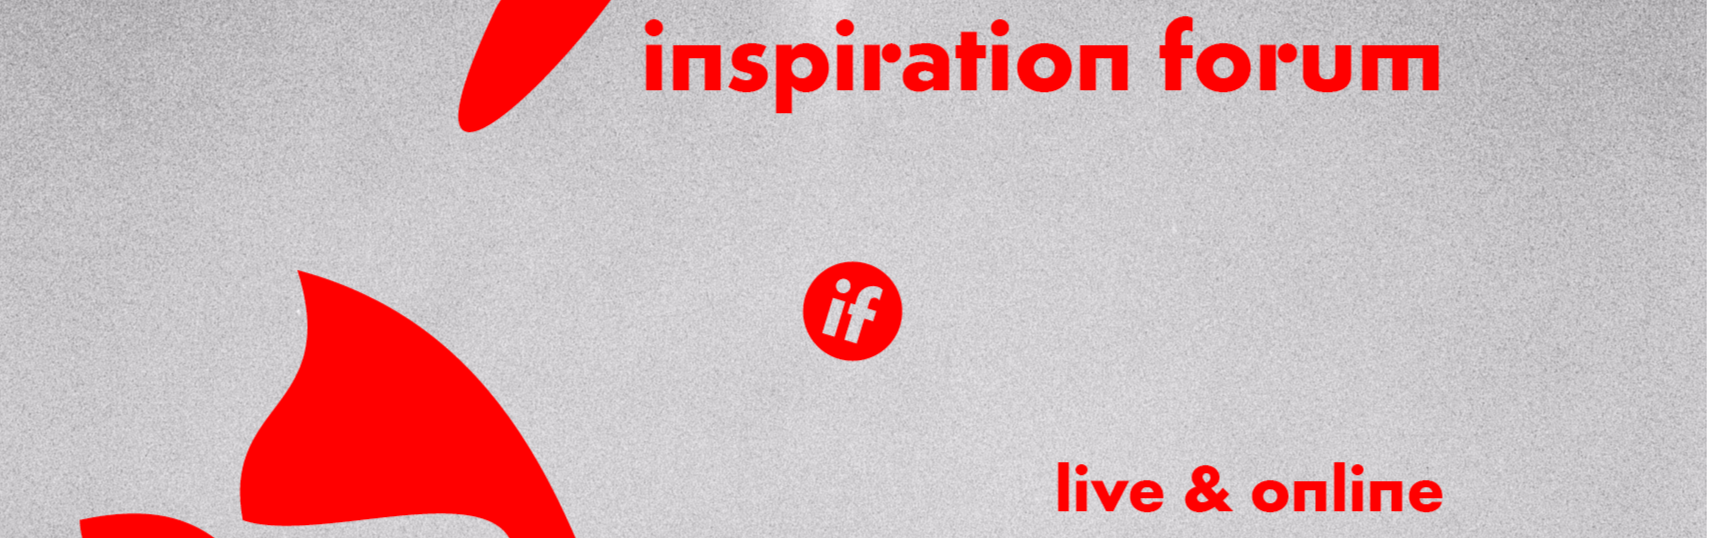 inspiration forum